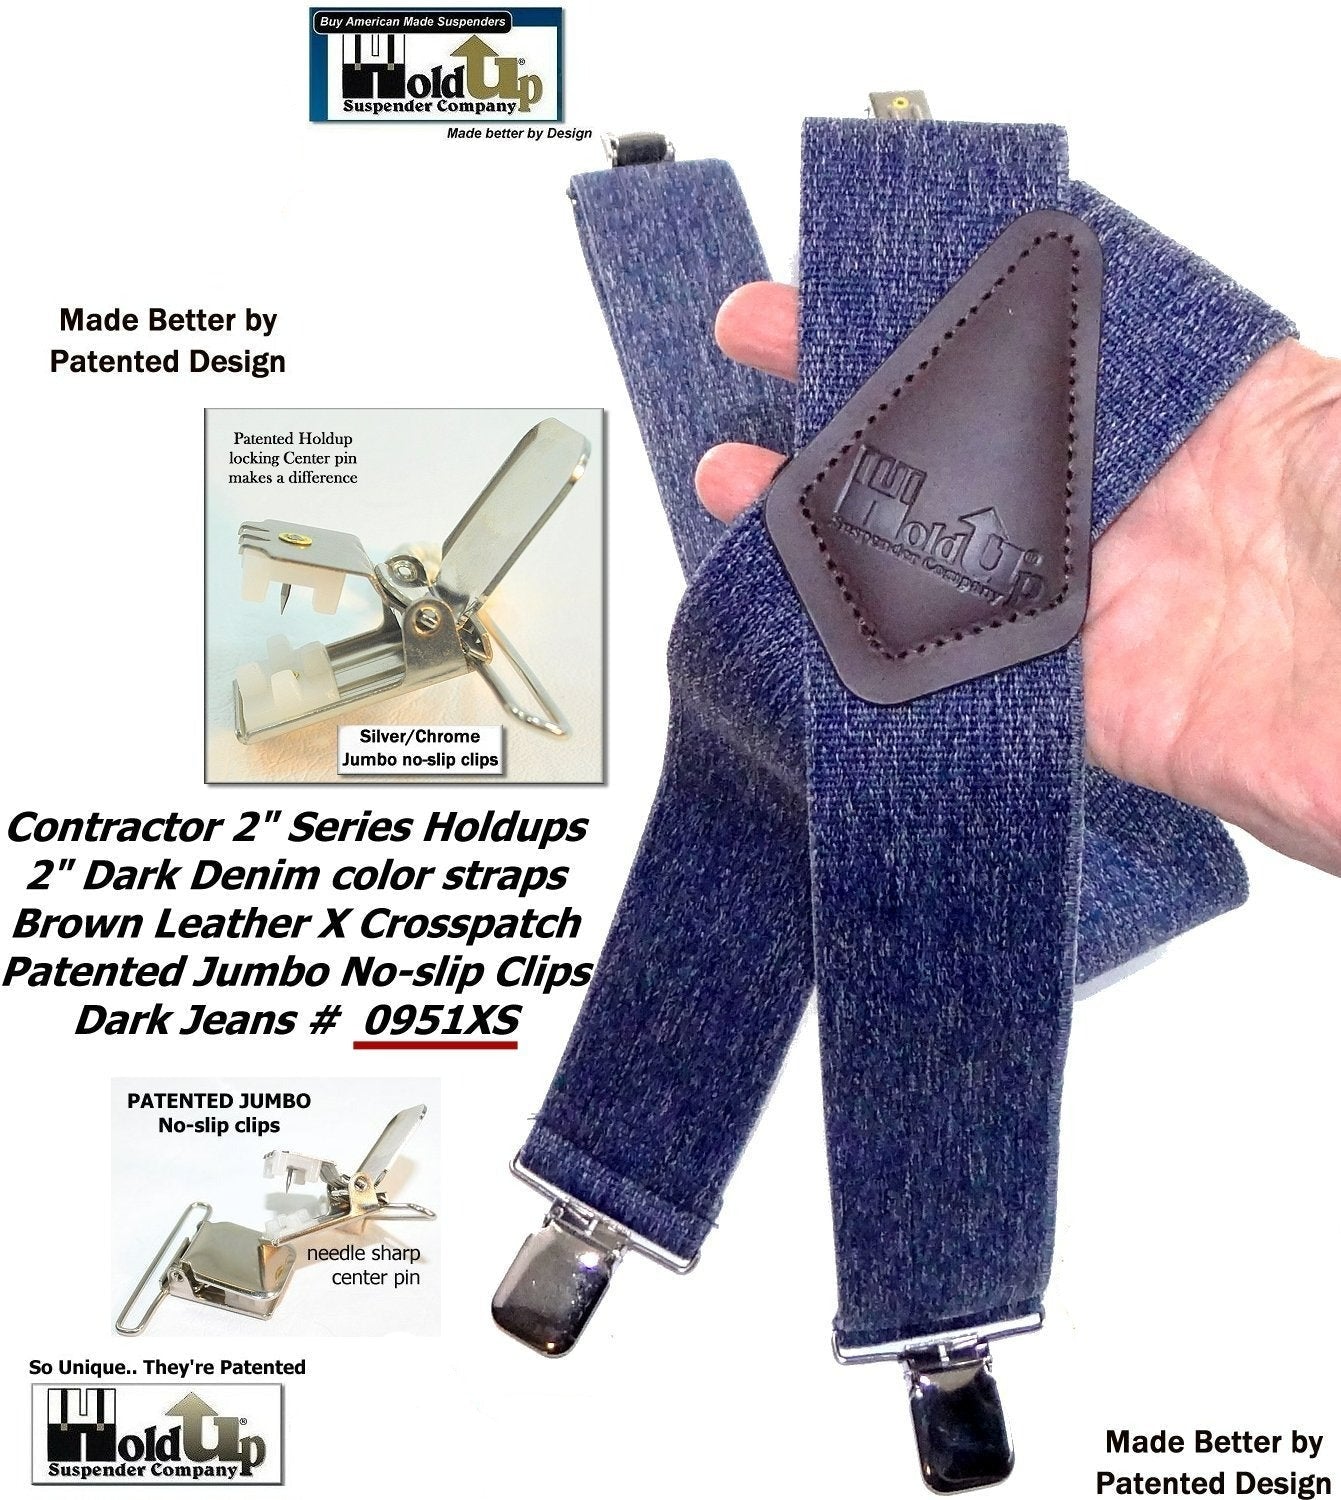 Holdup Brand Heavy Duty Dark Denim Work Suspenders with USA Patented Silver Tone no-slip clips